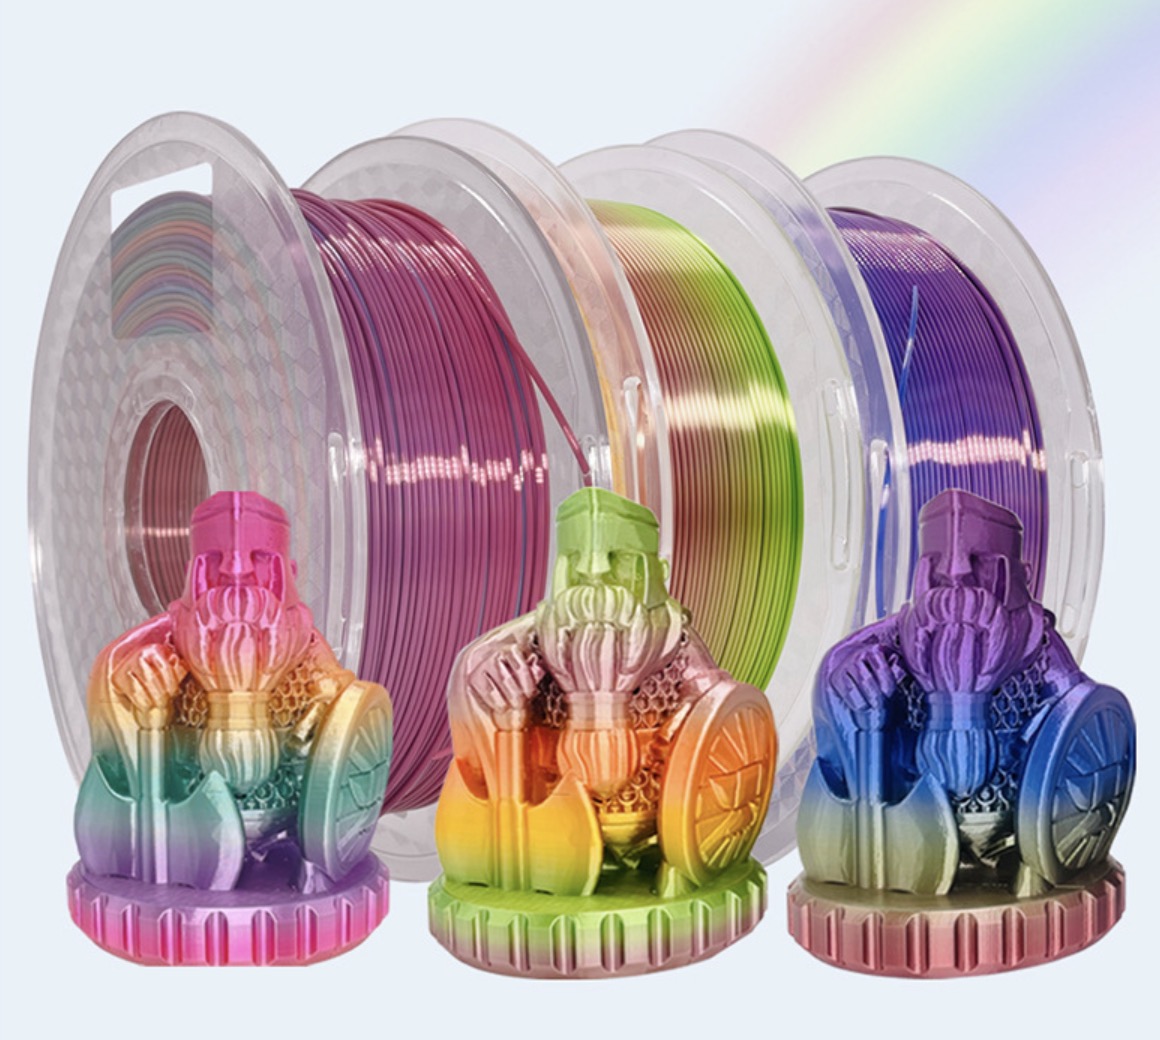 Rainbow Silk PLA Filament - Multithemed and Multicolored 1.75mm Spool